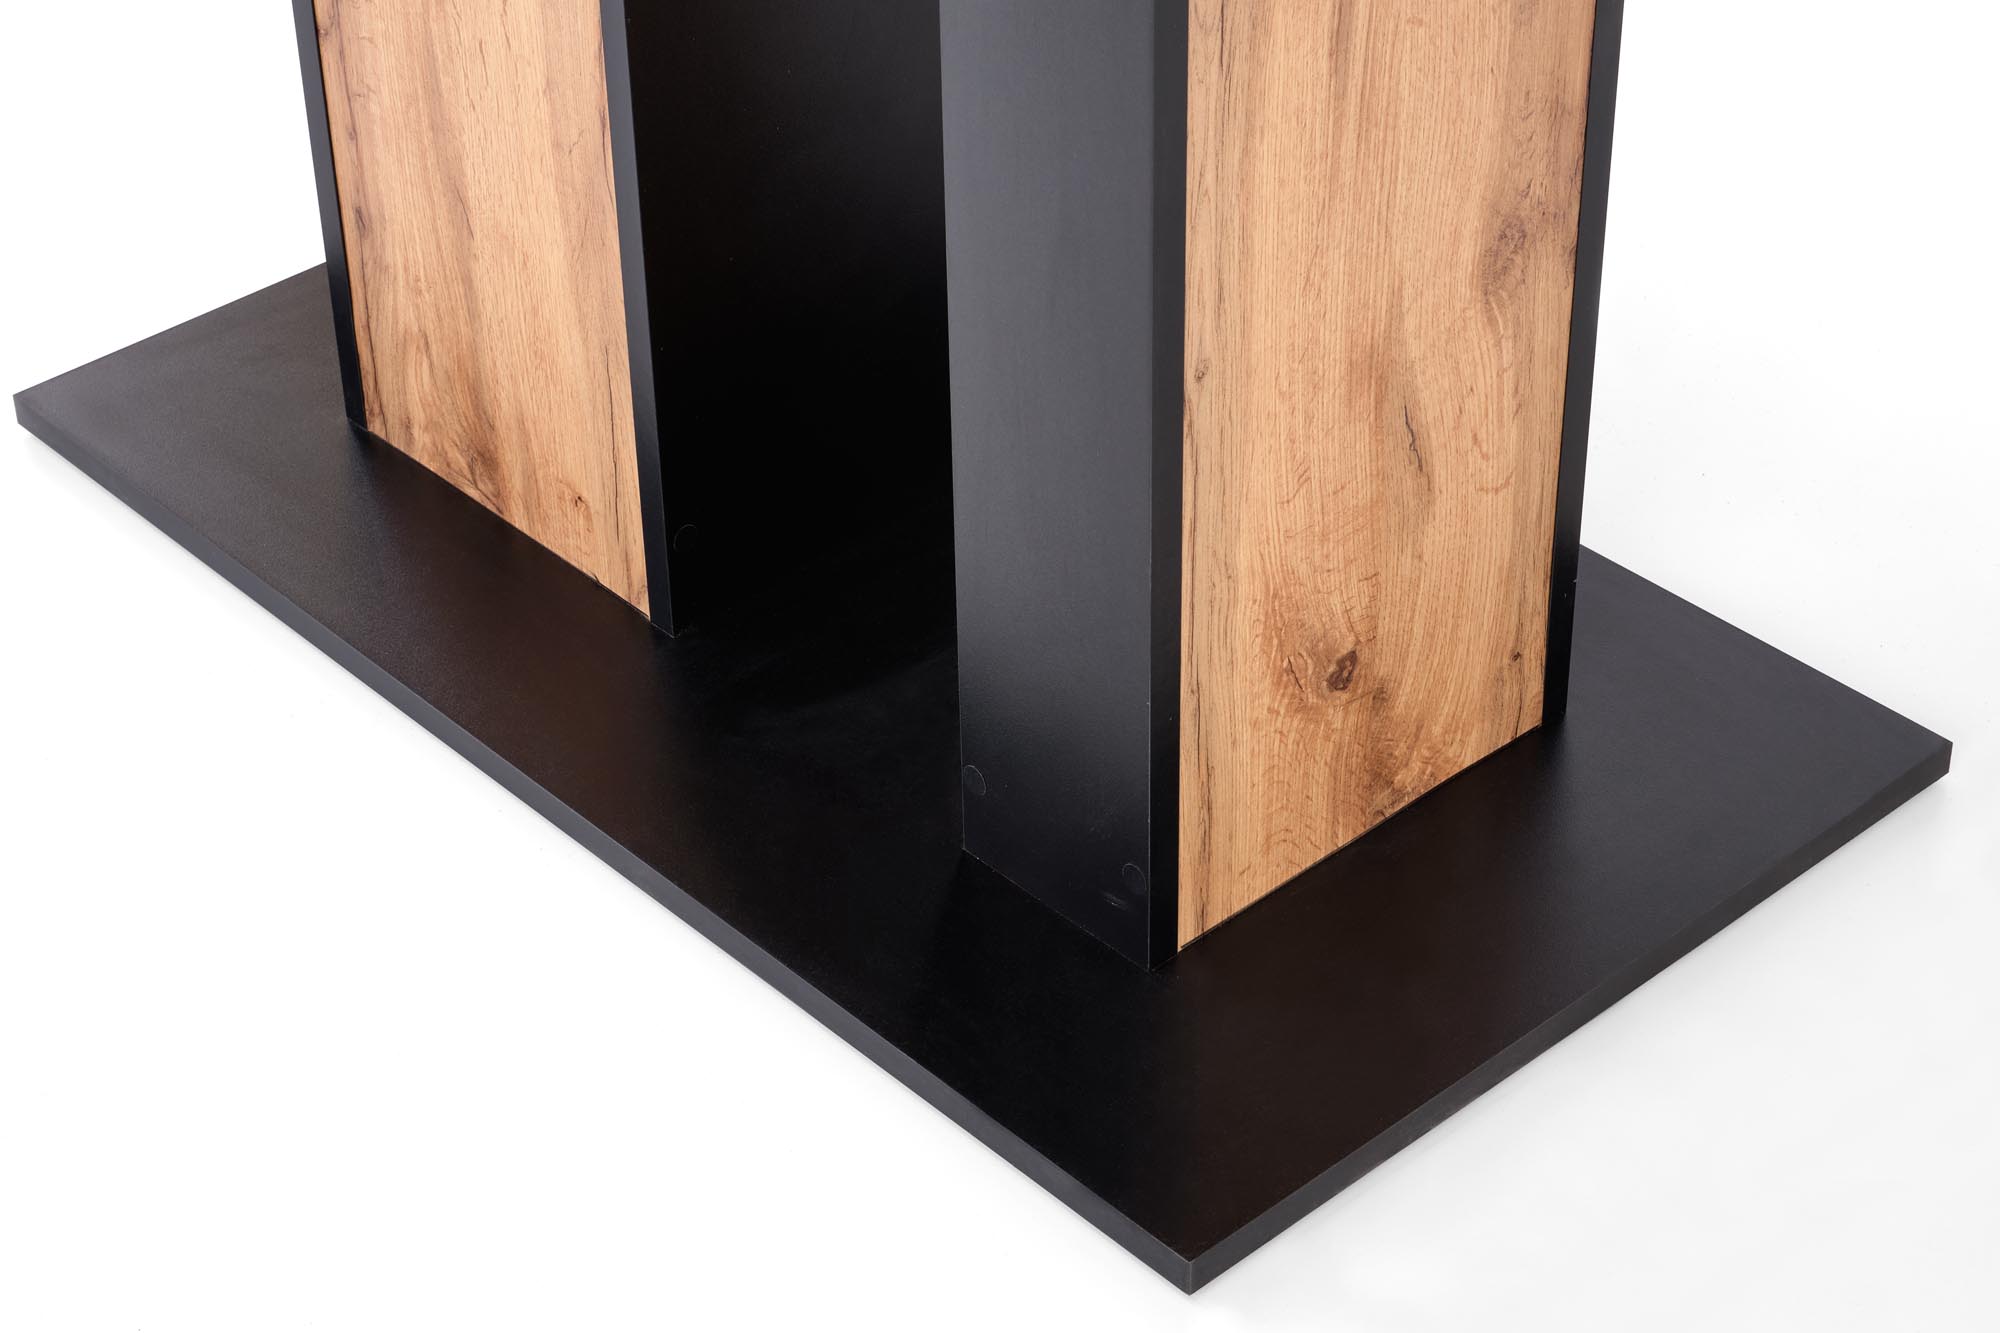 Rozkladací stôl DOLOMIT 130-170x85 cm - dub wotan / čierna dolomit Stôl rozkladany Dub wotan - Čierny